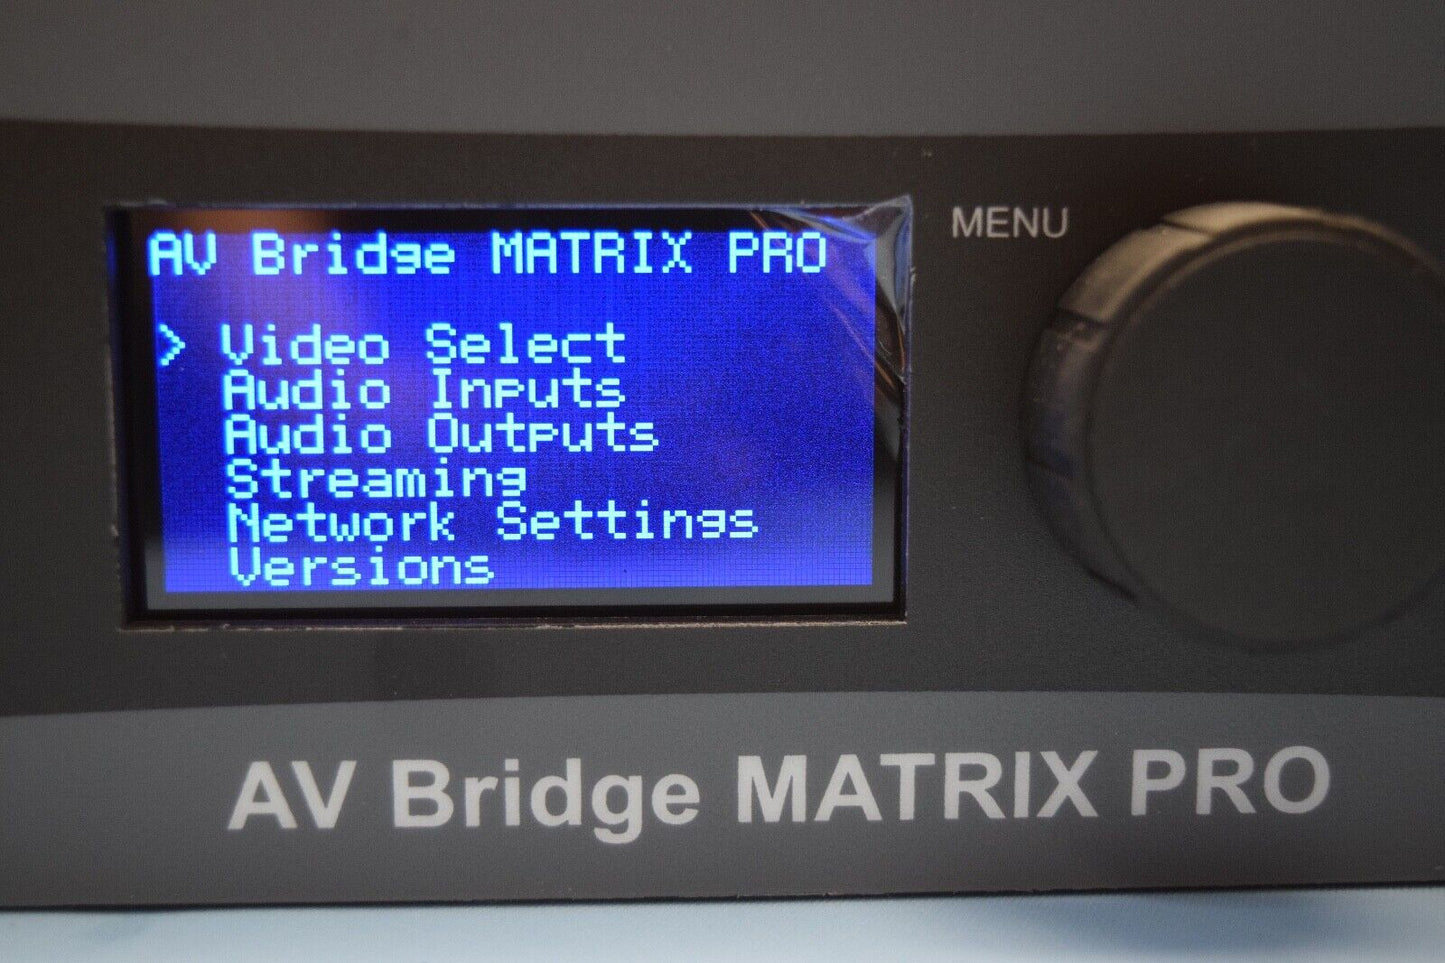 Vaddio 999-8230-000 AV Bridge MATRIX PRO  North America